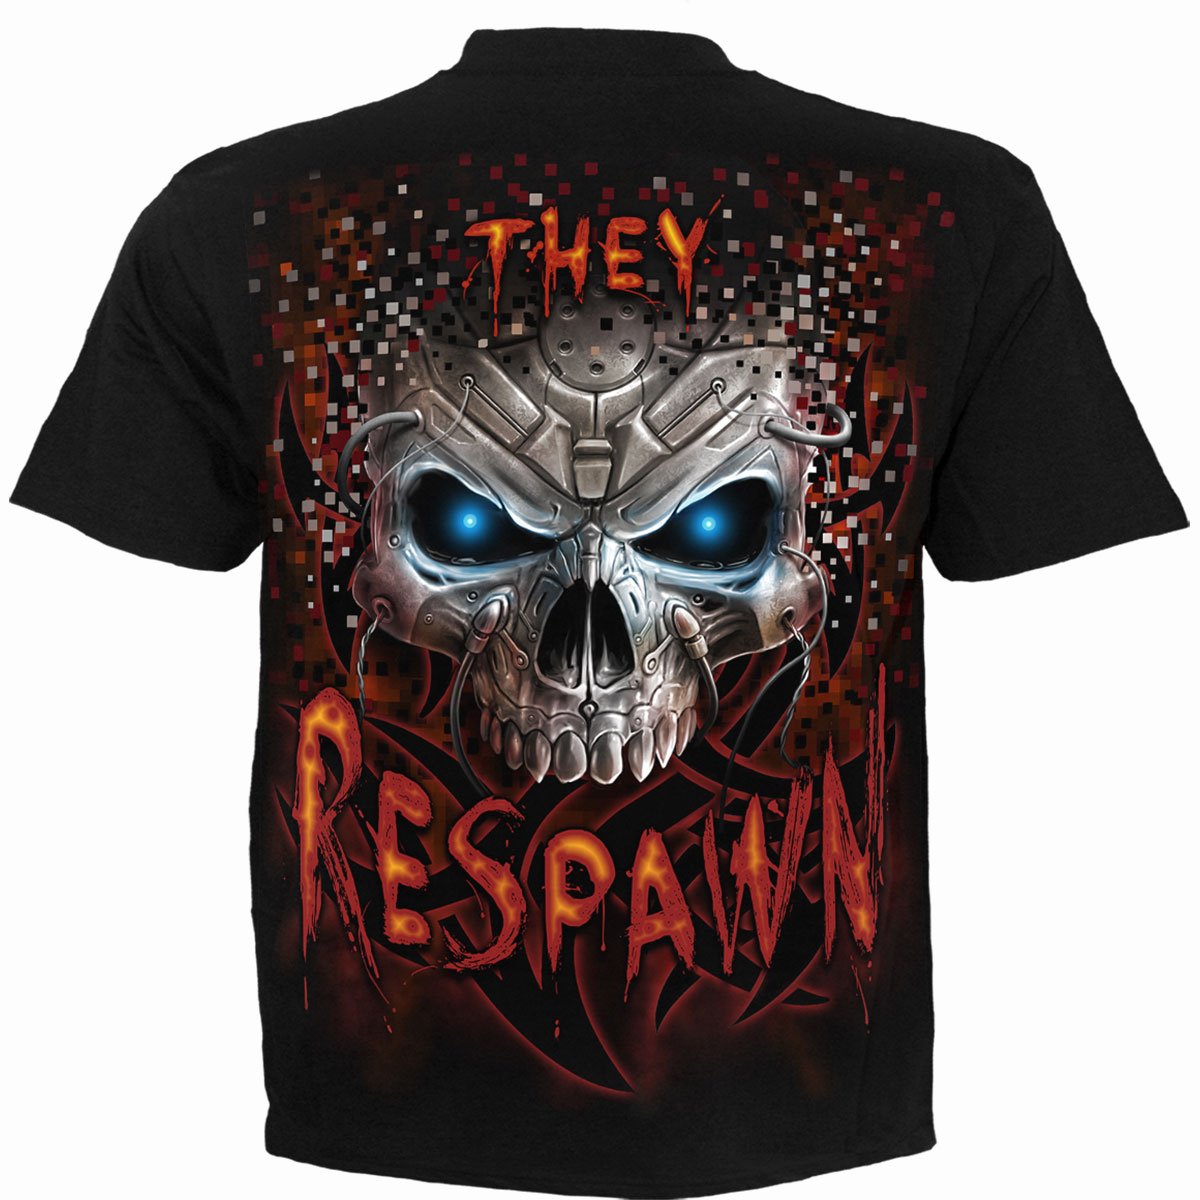 RESPAWN - T-Shirt Black